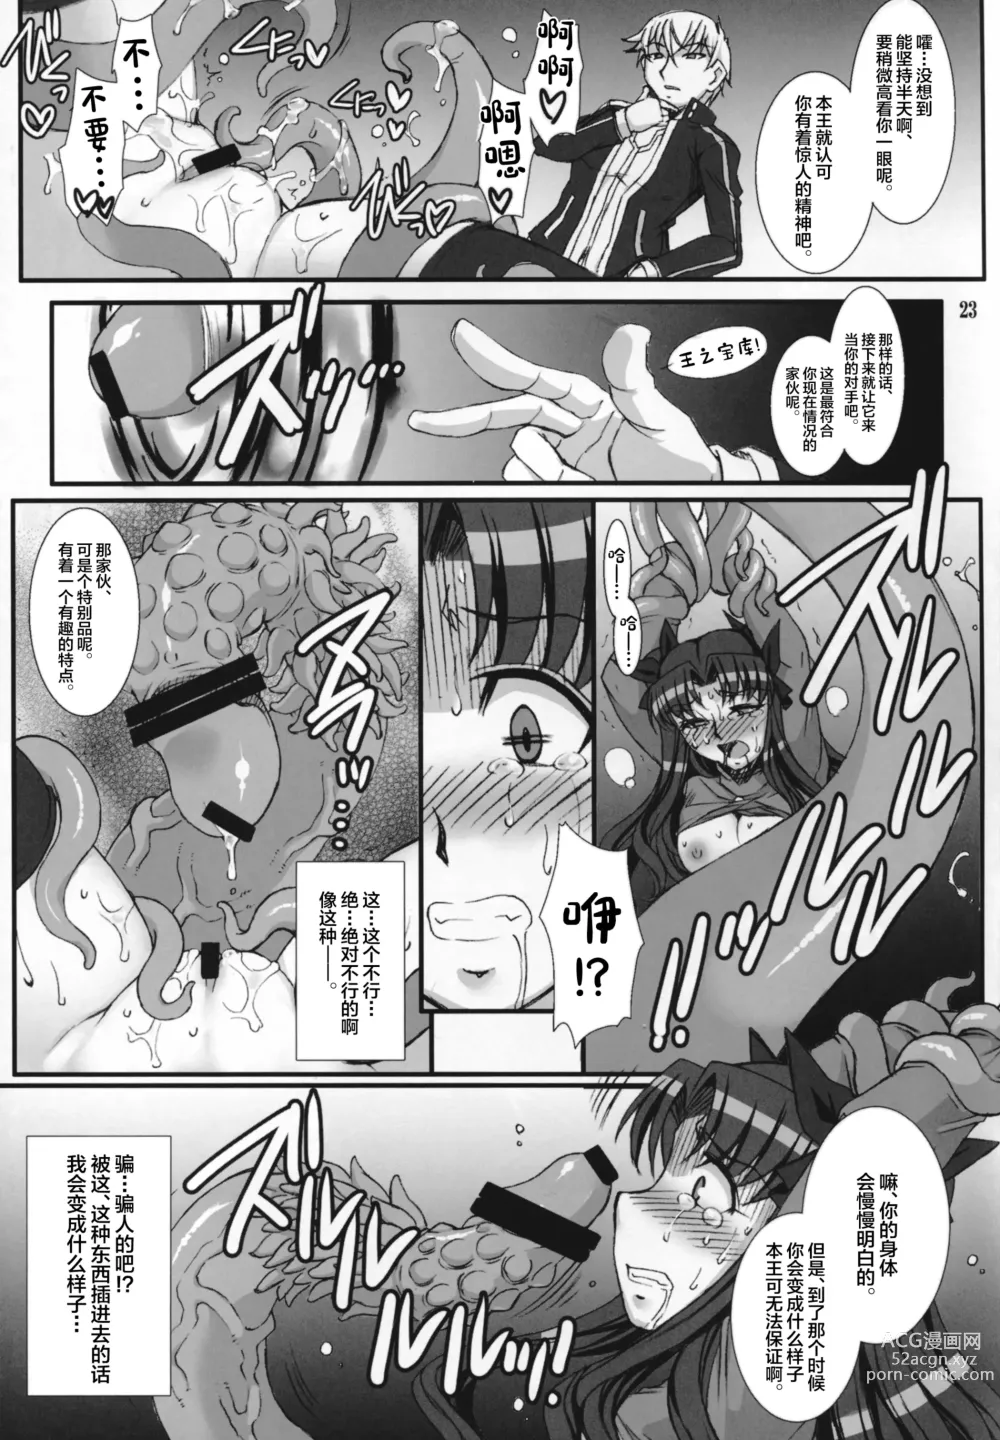 Page 23 of doujinshi Rin Kai -Kegasareta Aka-